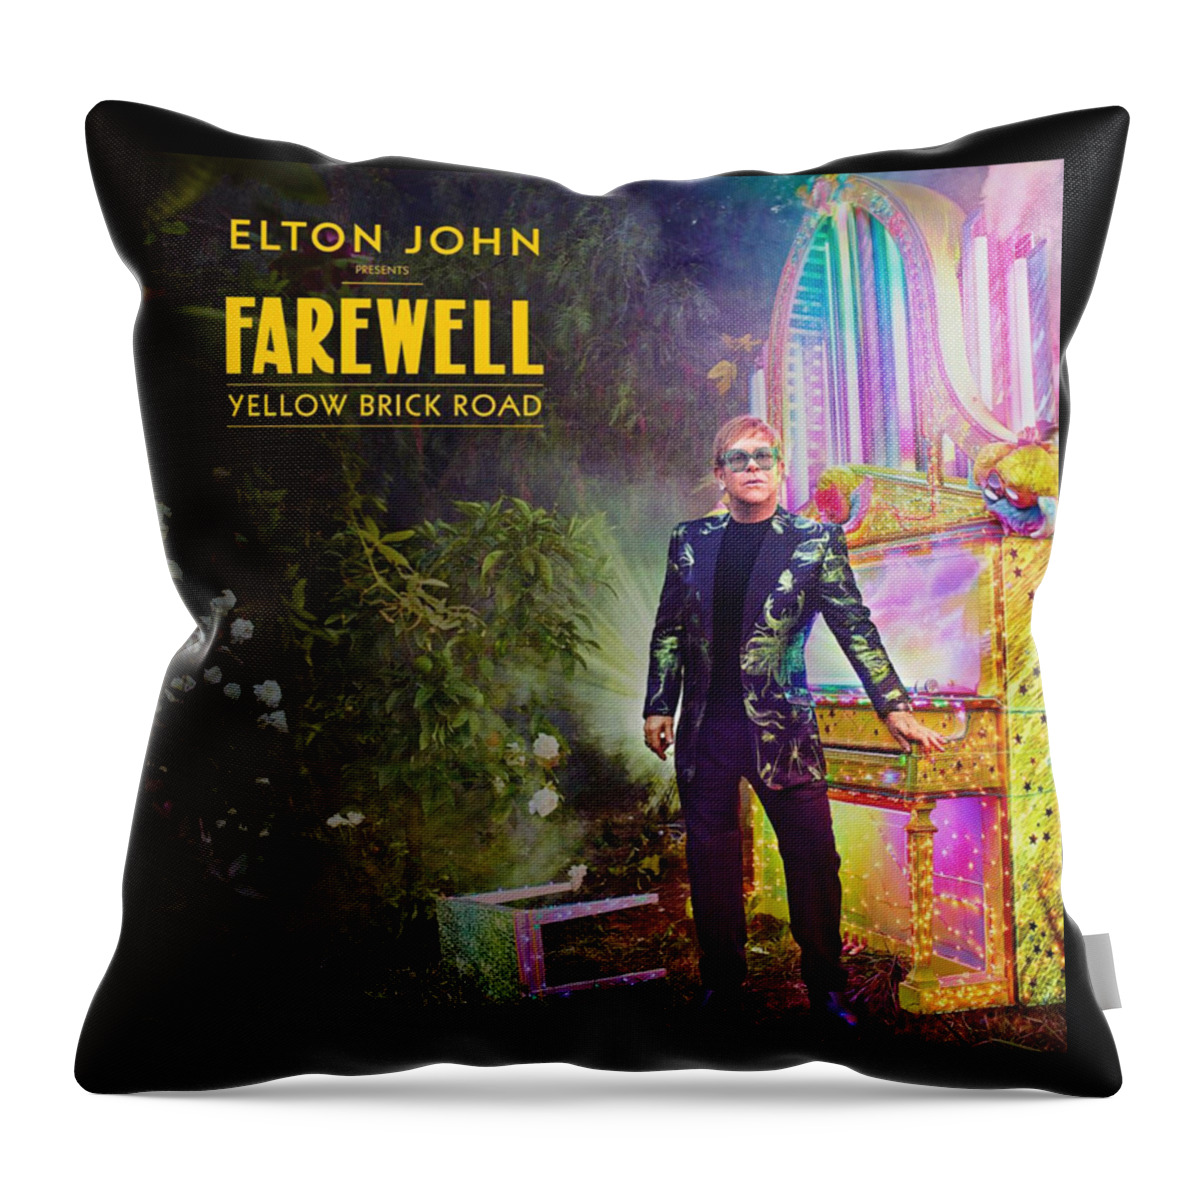 Frame Throw Pillow featuring the digital art Frame Print Elton John Farewell Yellow Brick Road 2019 Iy01 by Indah Yose